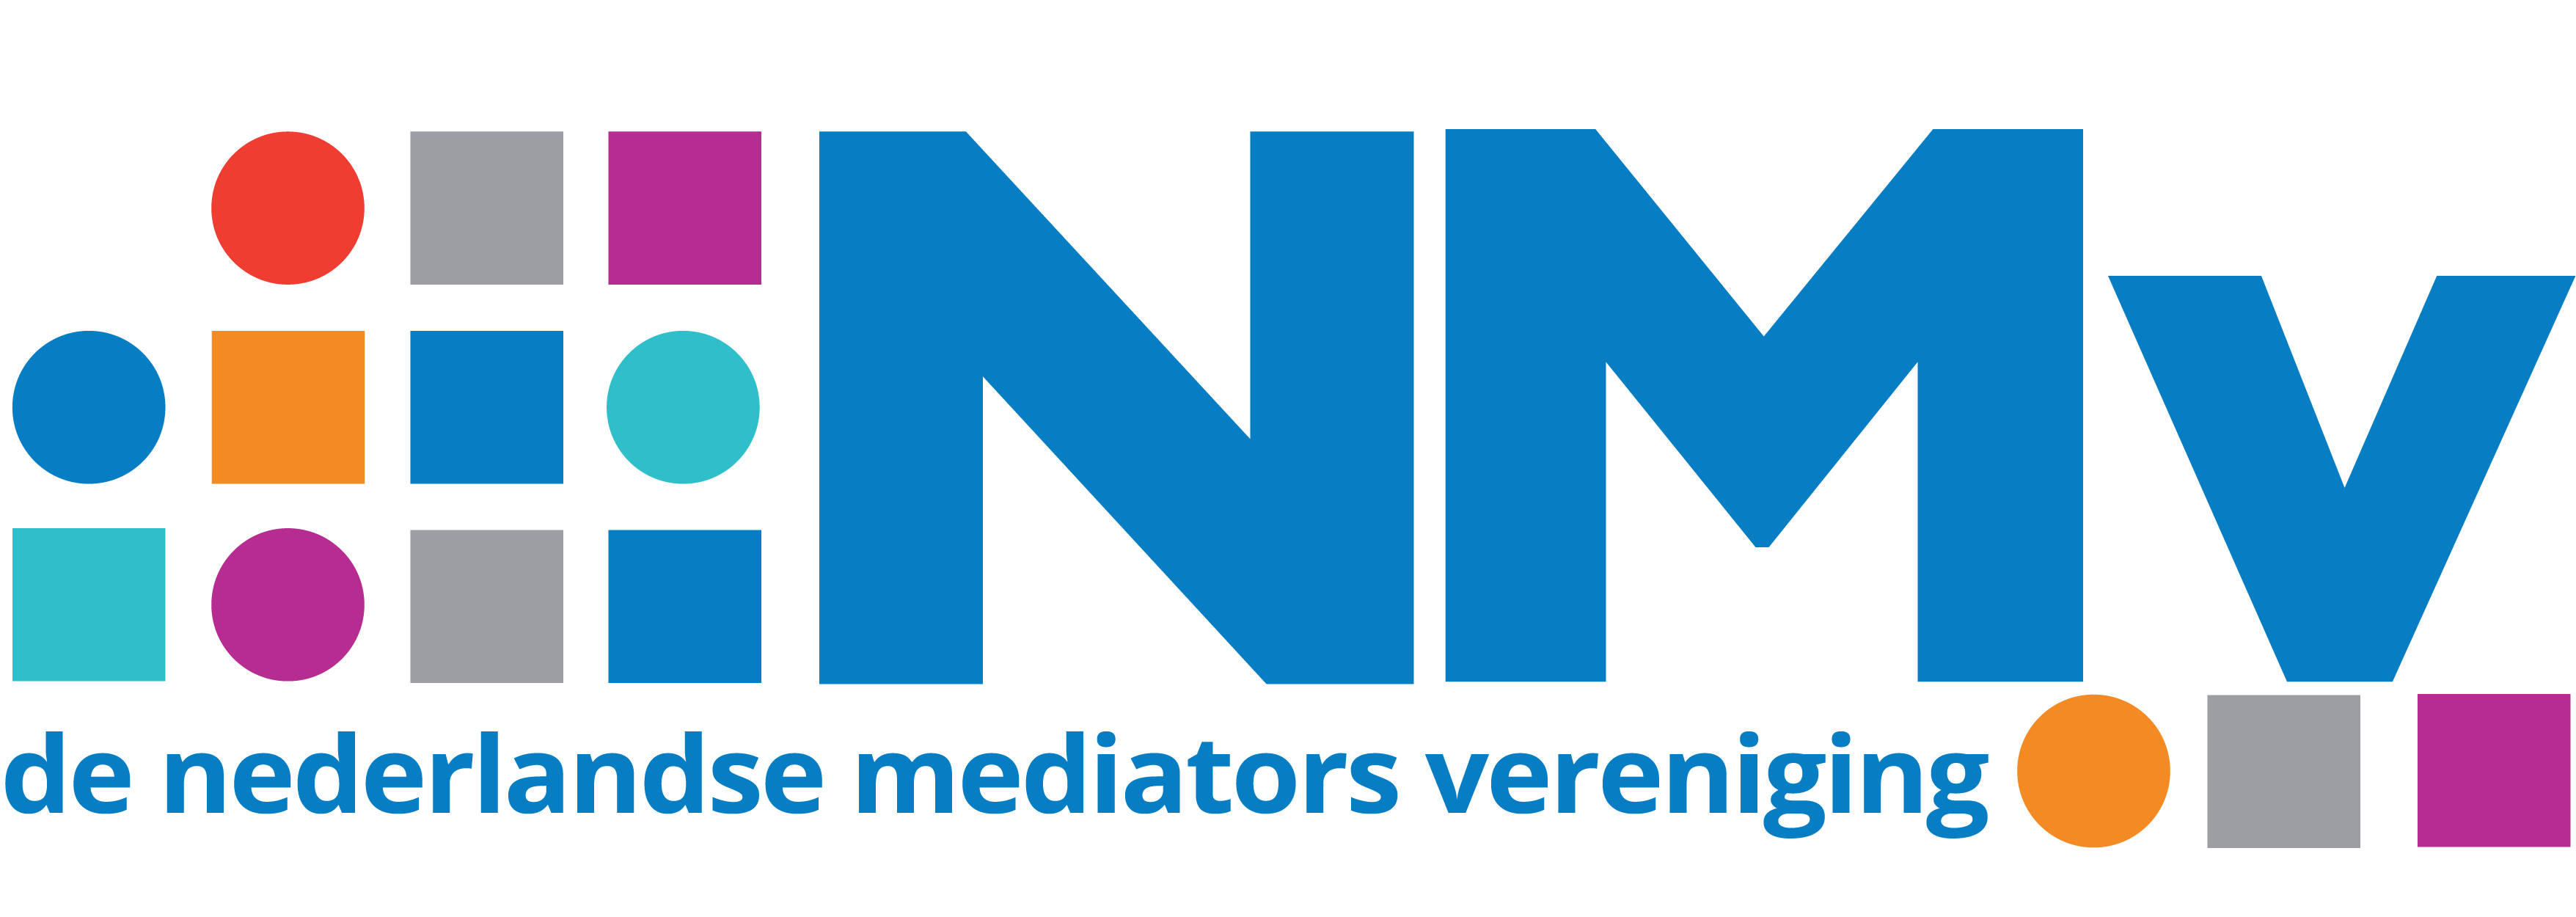 Nederlandse Mediators vereniging